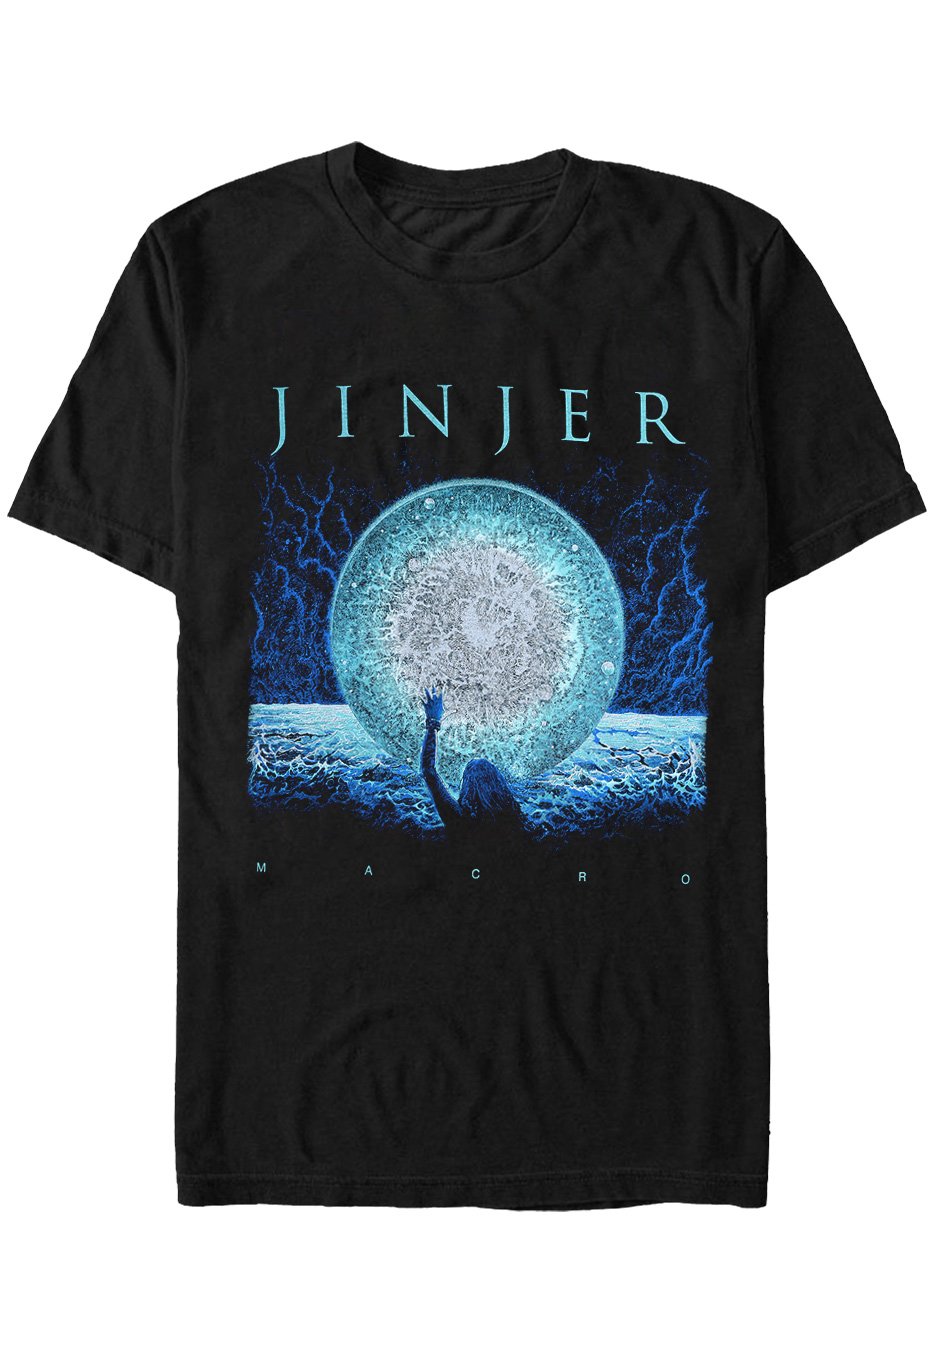 Jinjer - Macro - T-Shirt | Neutral-Image